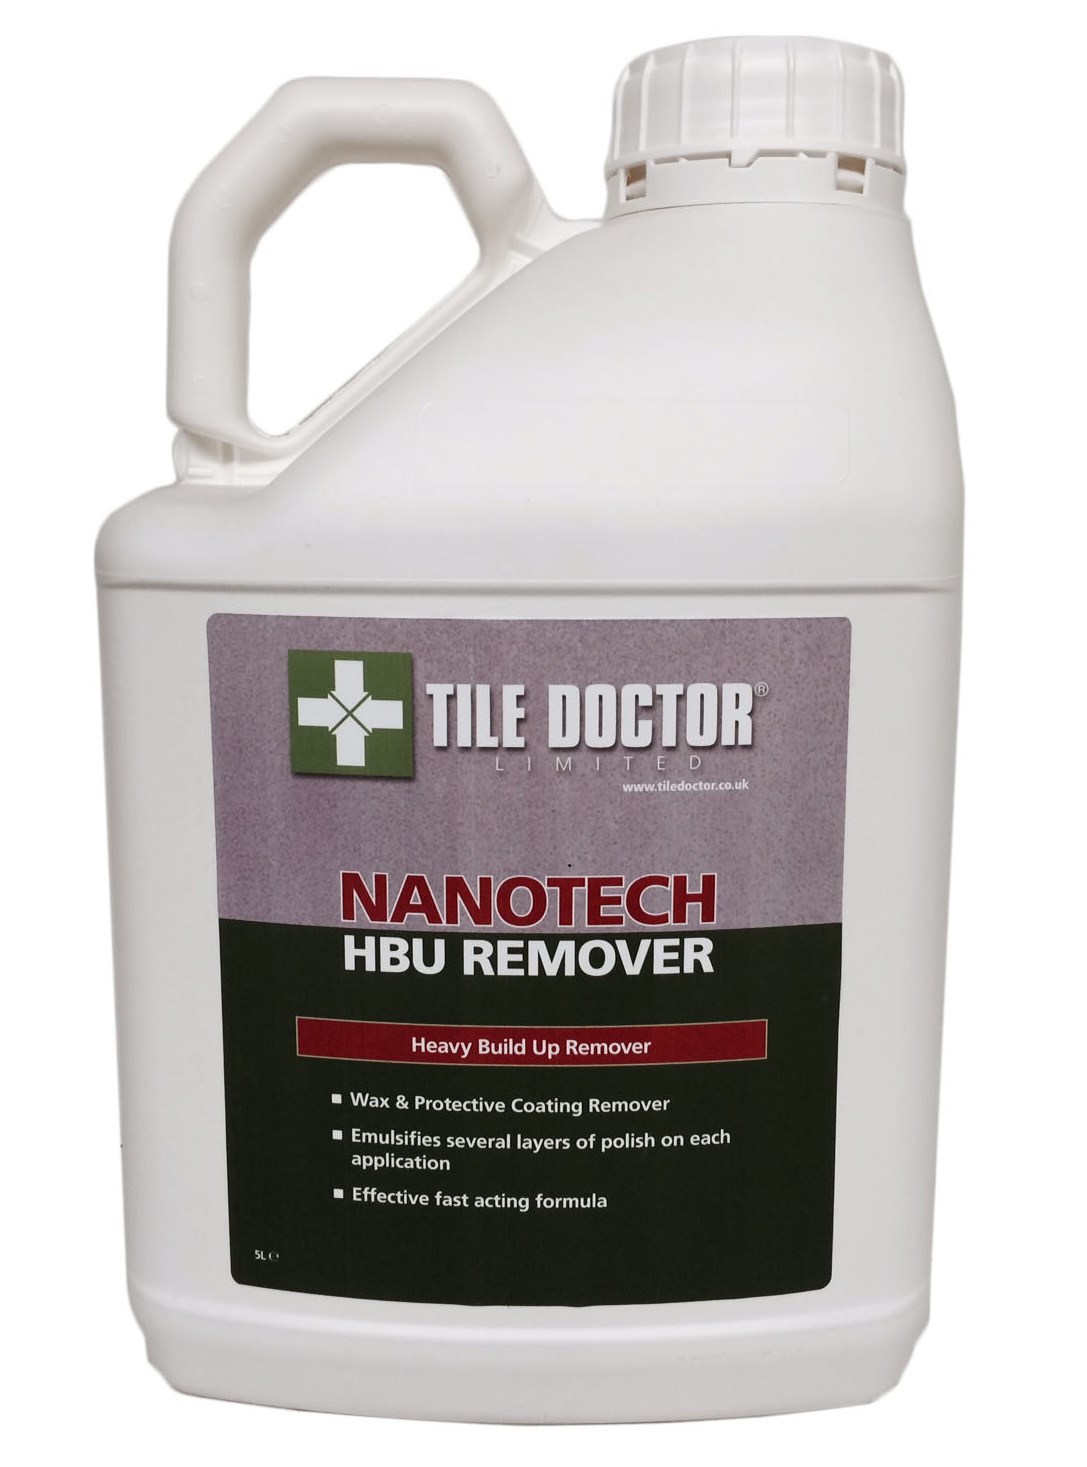 Tile Doctor Nanotech HBU Remover 5 Litre